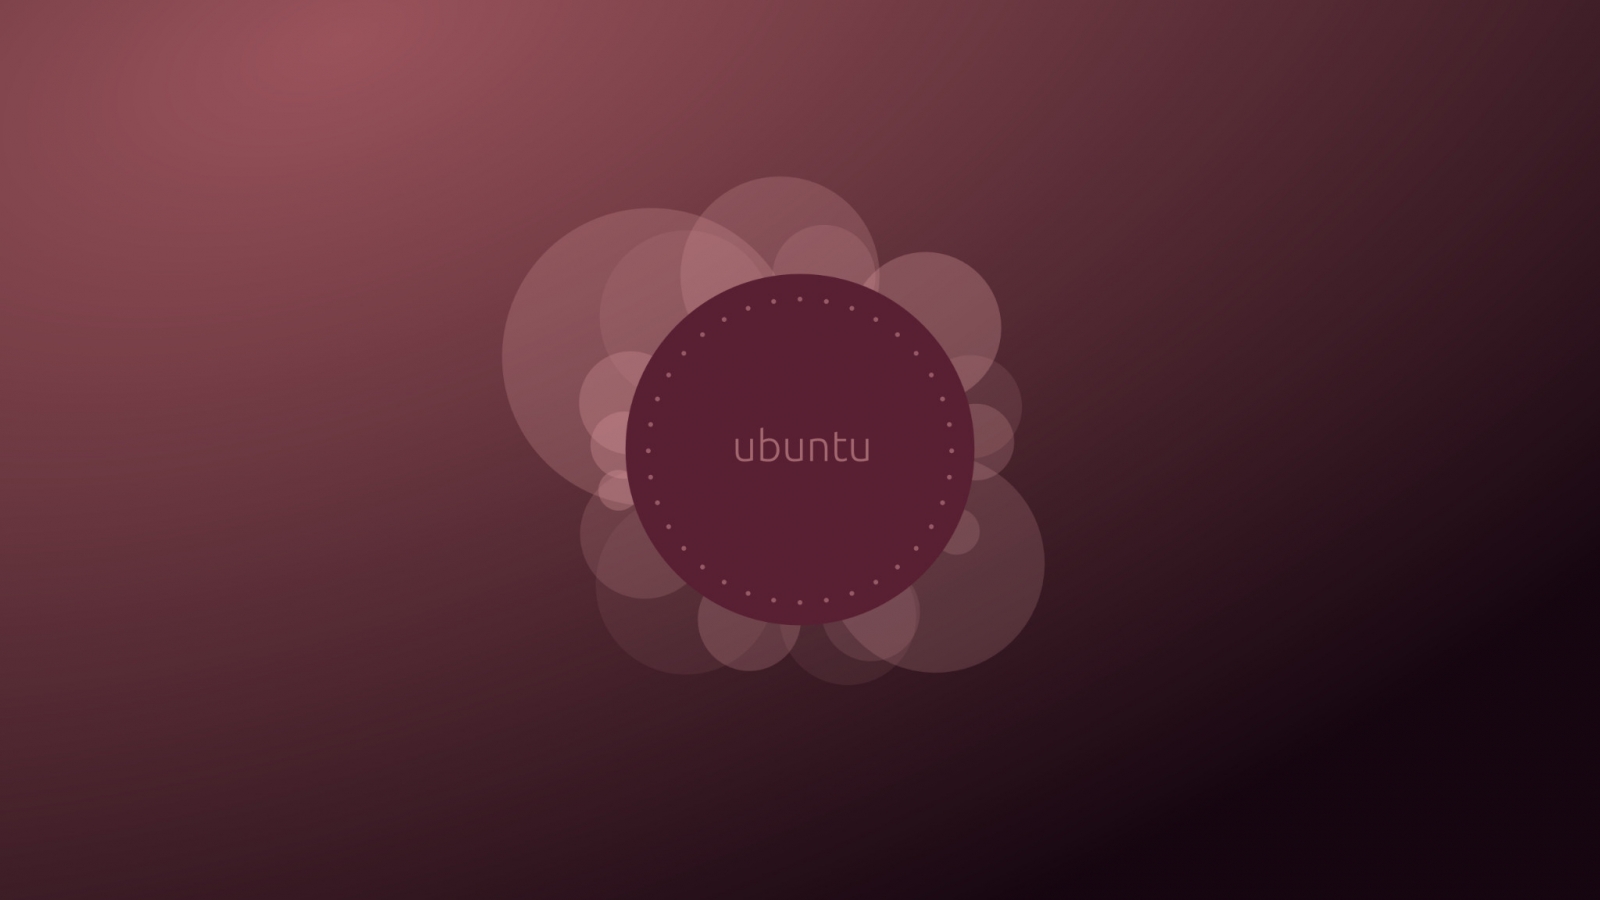 Wallpaper Ubuntu For Your Desktop